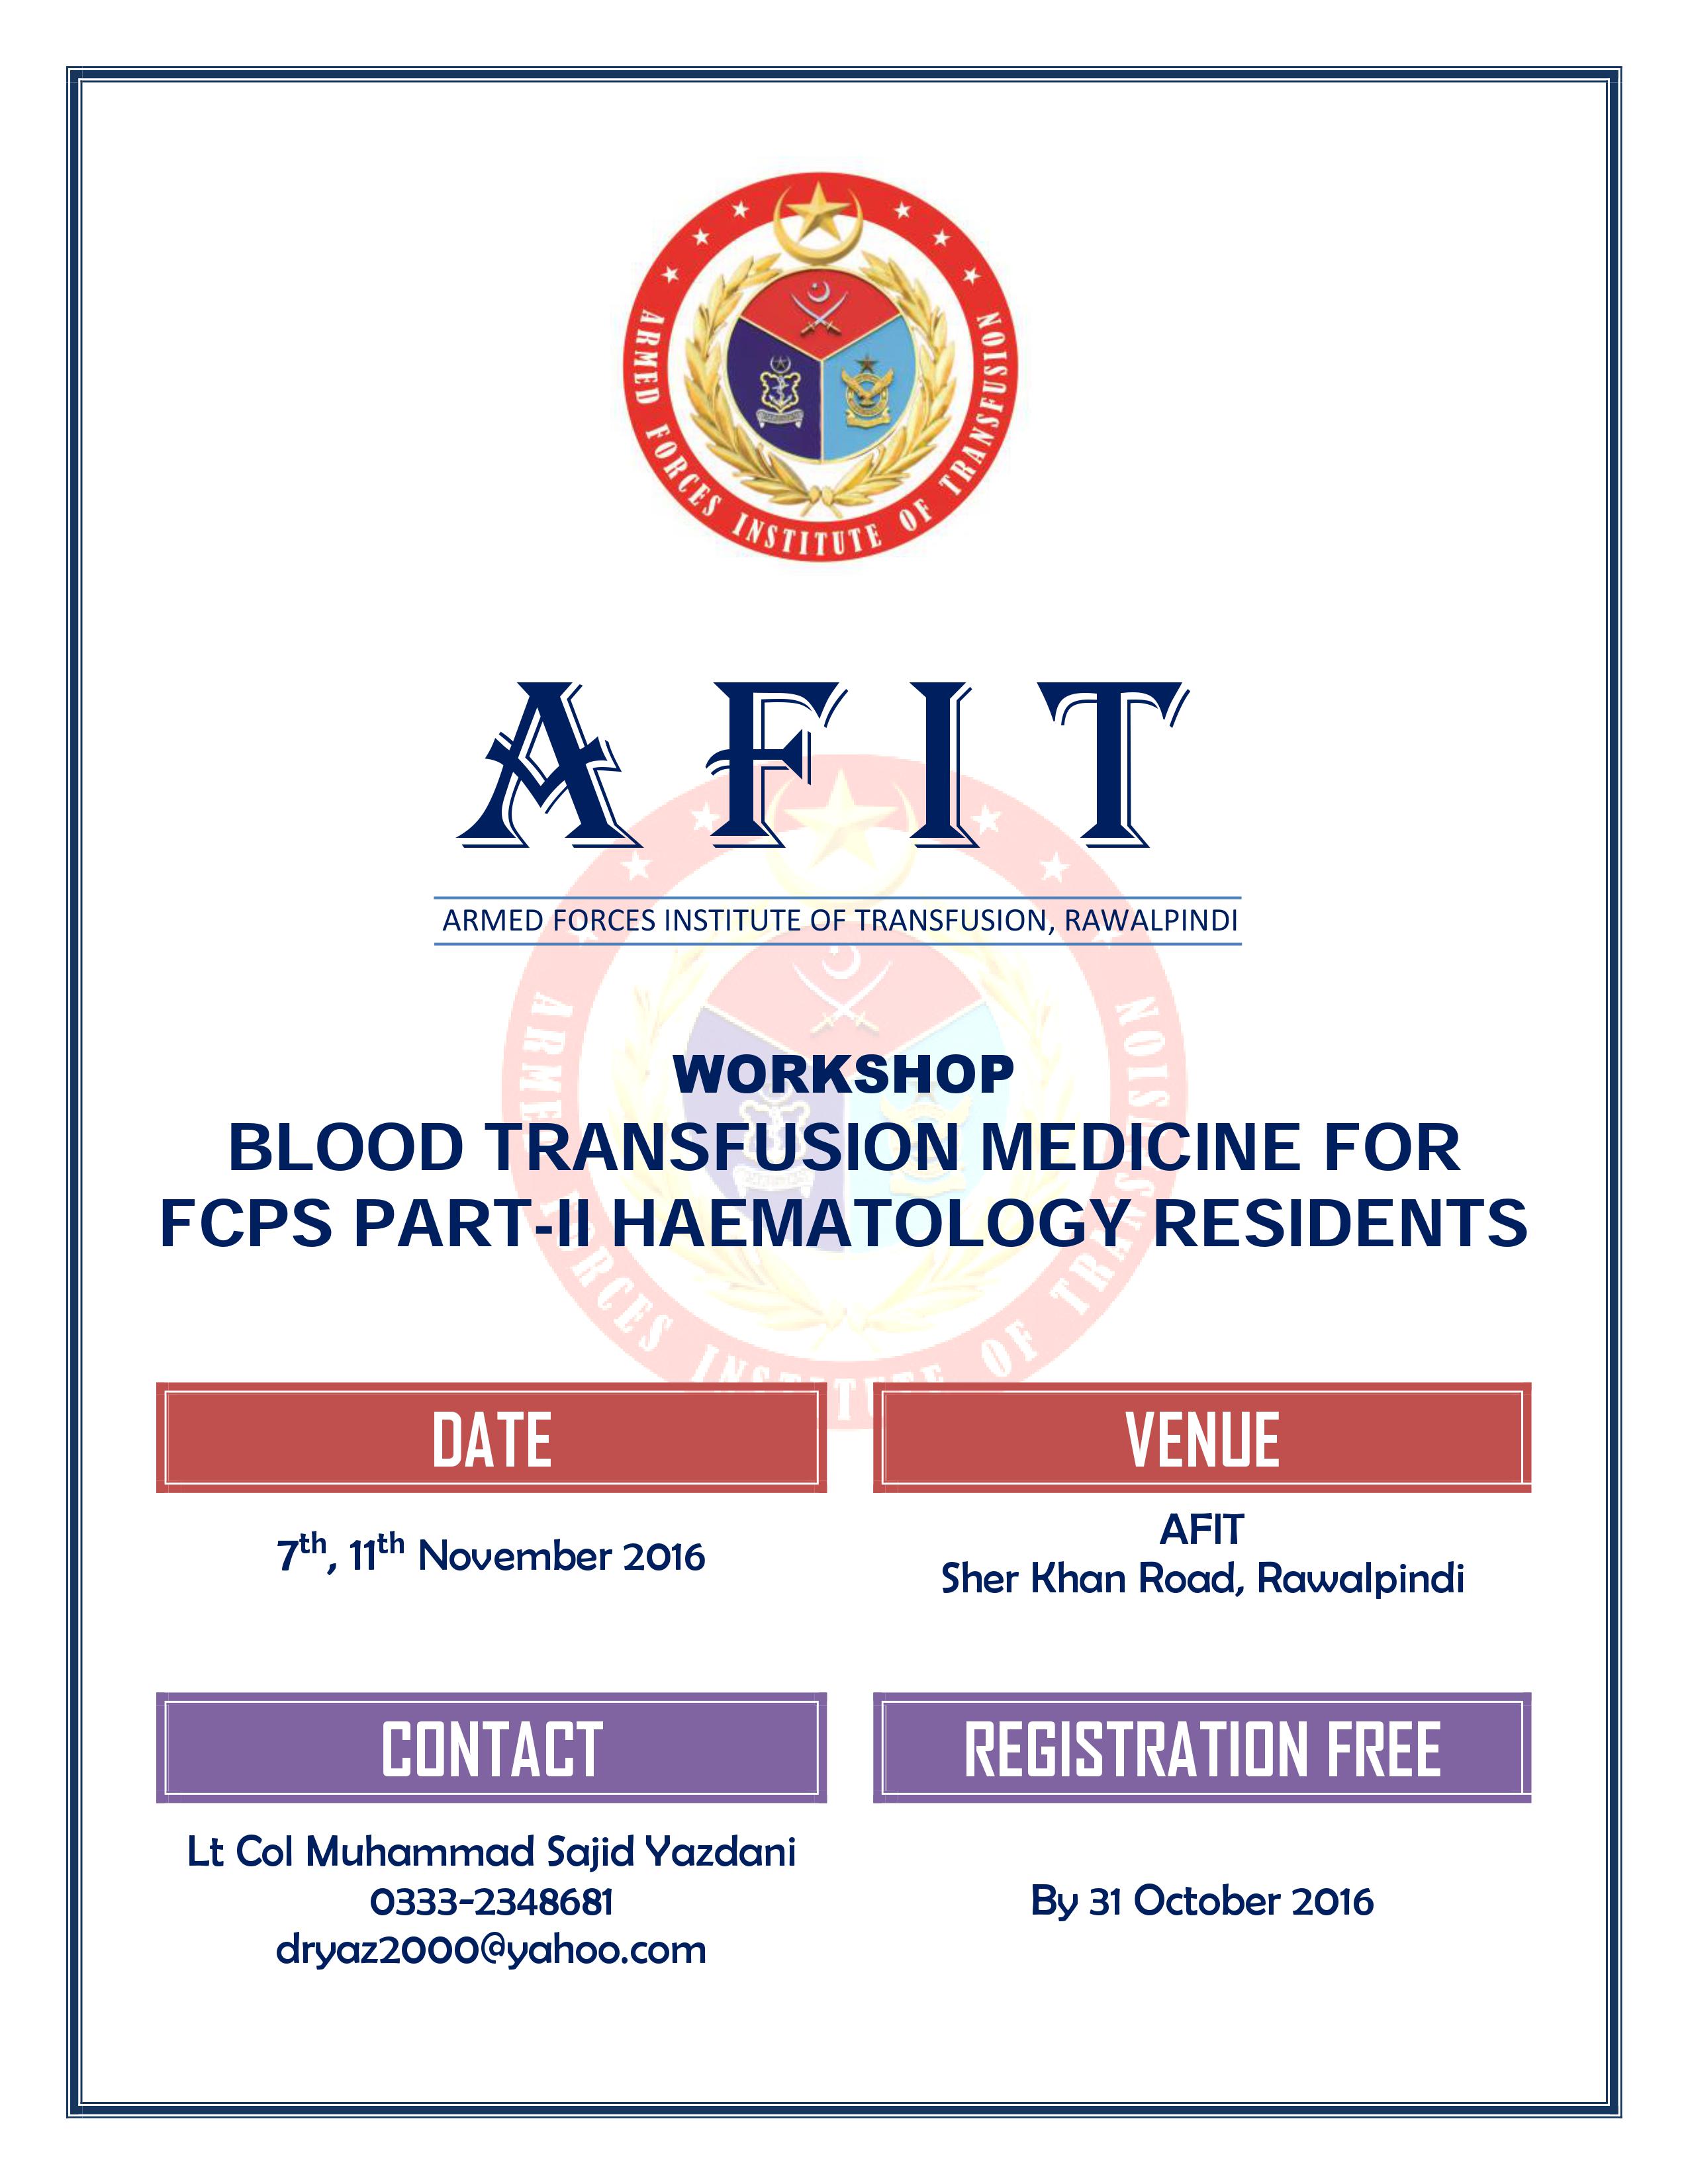 [PSH Workshop] Blood Transfusion Medicine for FCPS Part-II Haematology Residents - 7-11 Nov 2016